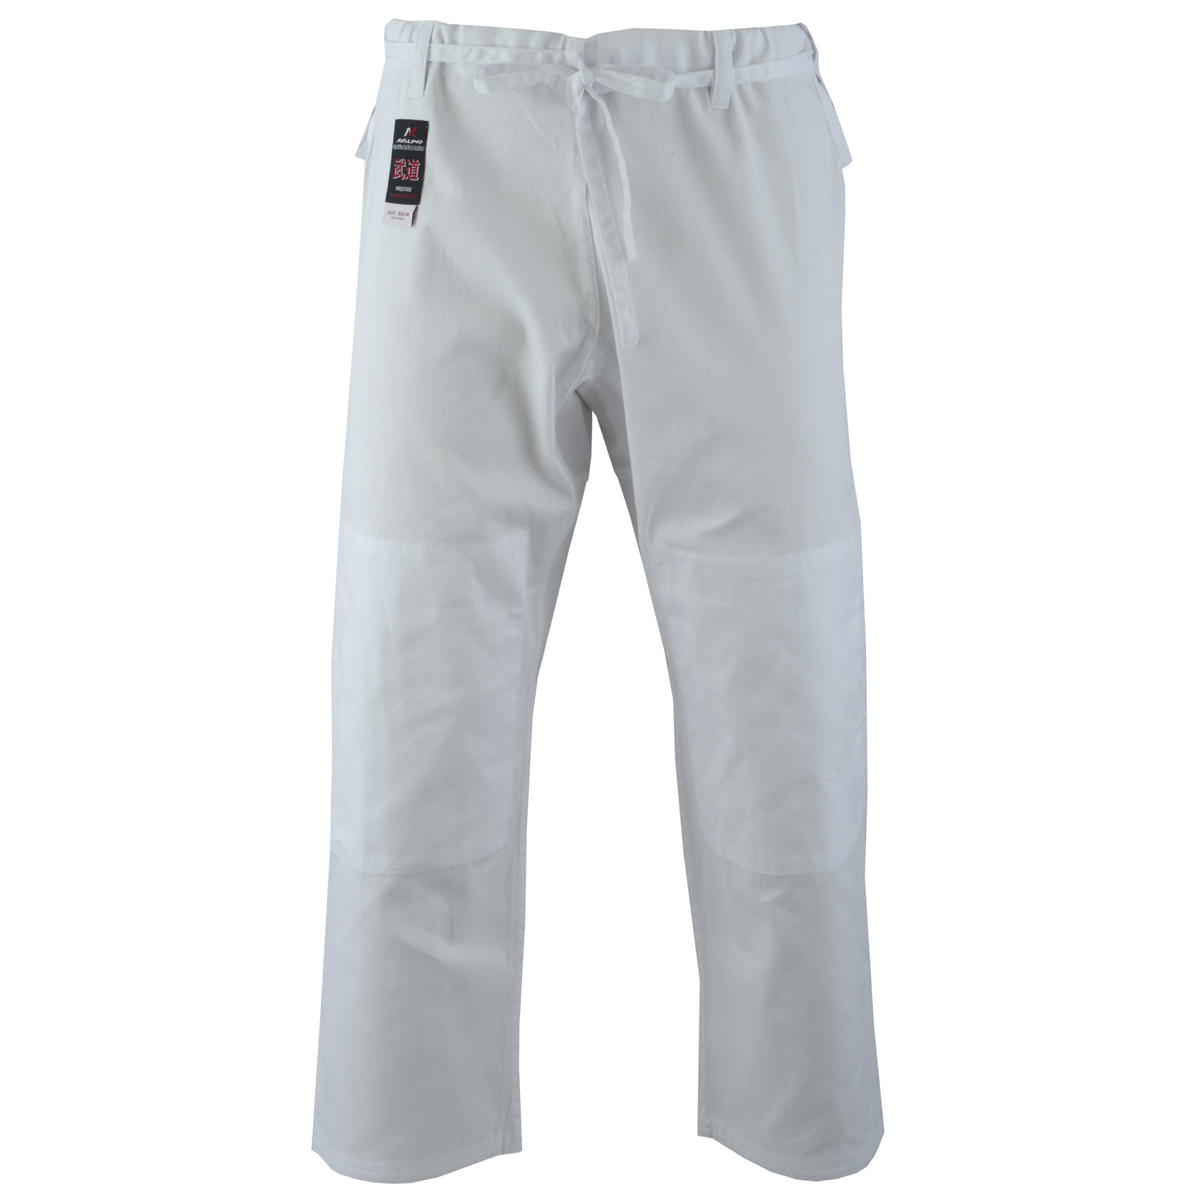 Malino Adult Student Judo Trousers Lightweight Cotton White - 7oz